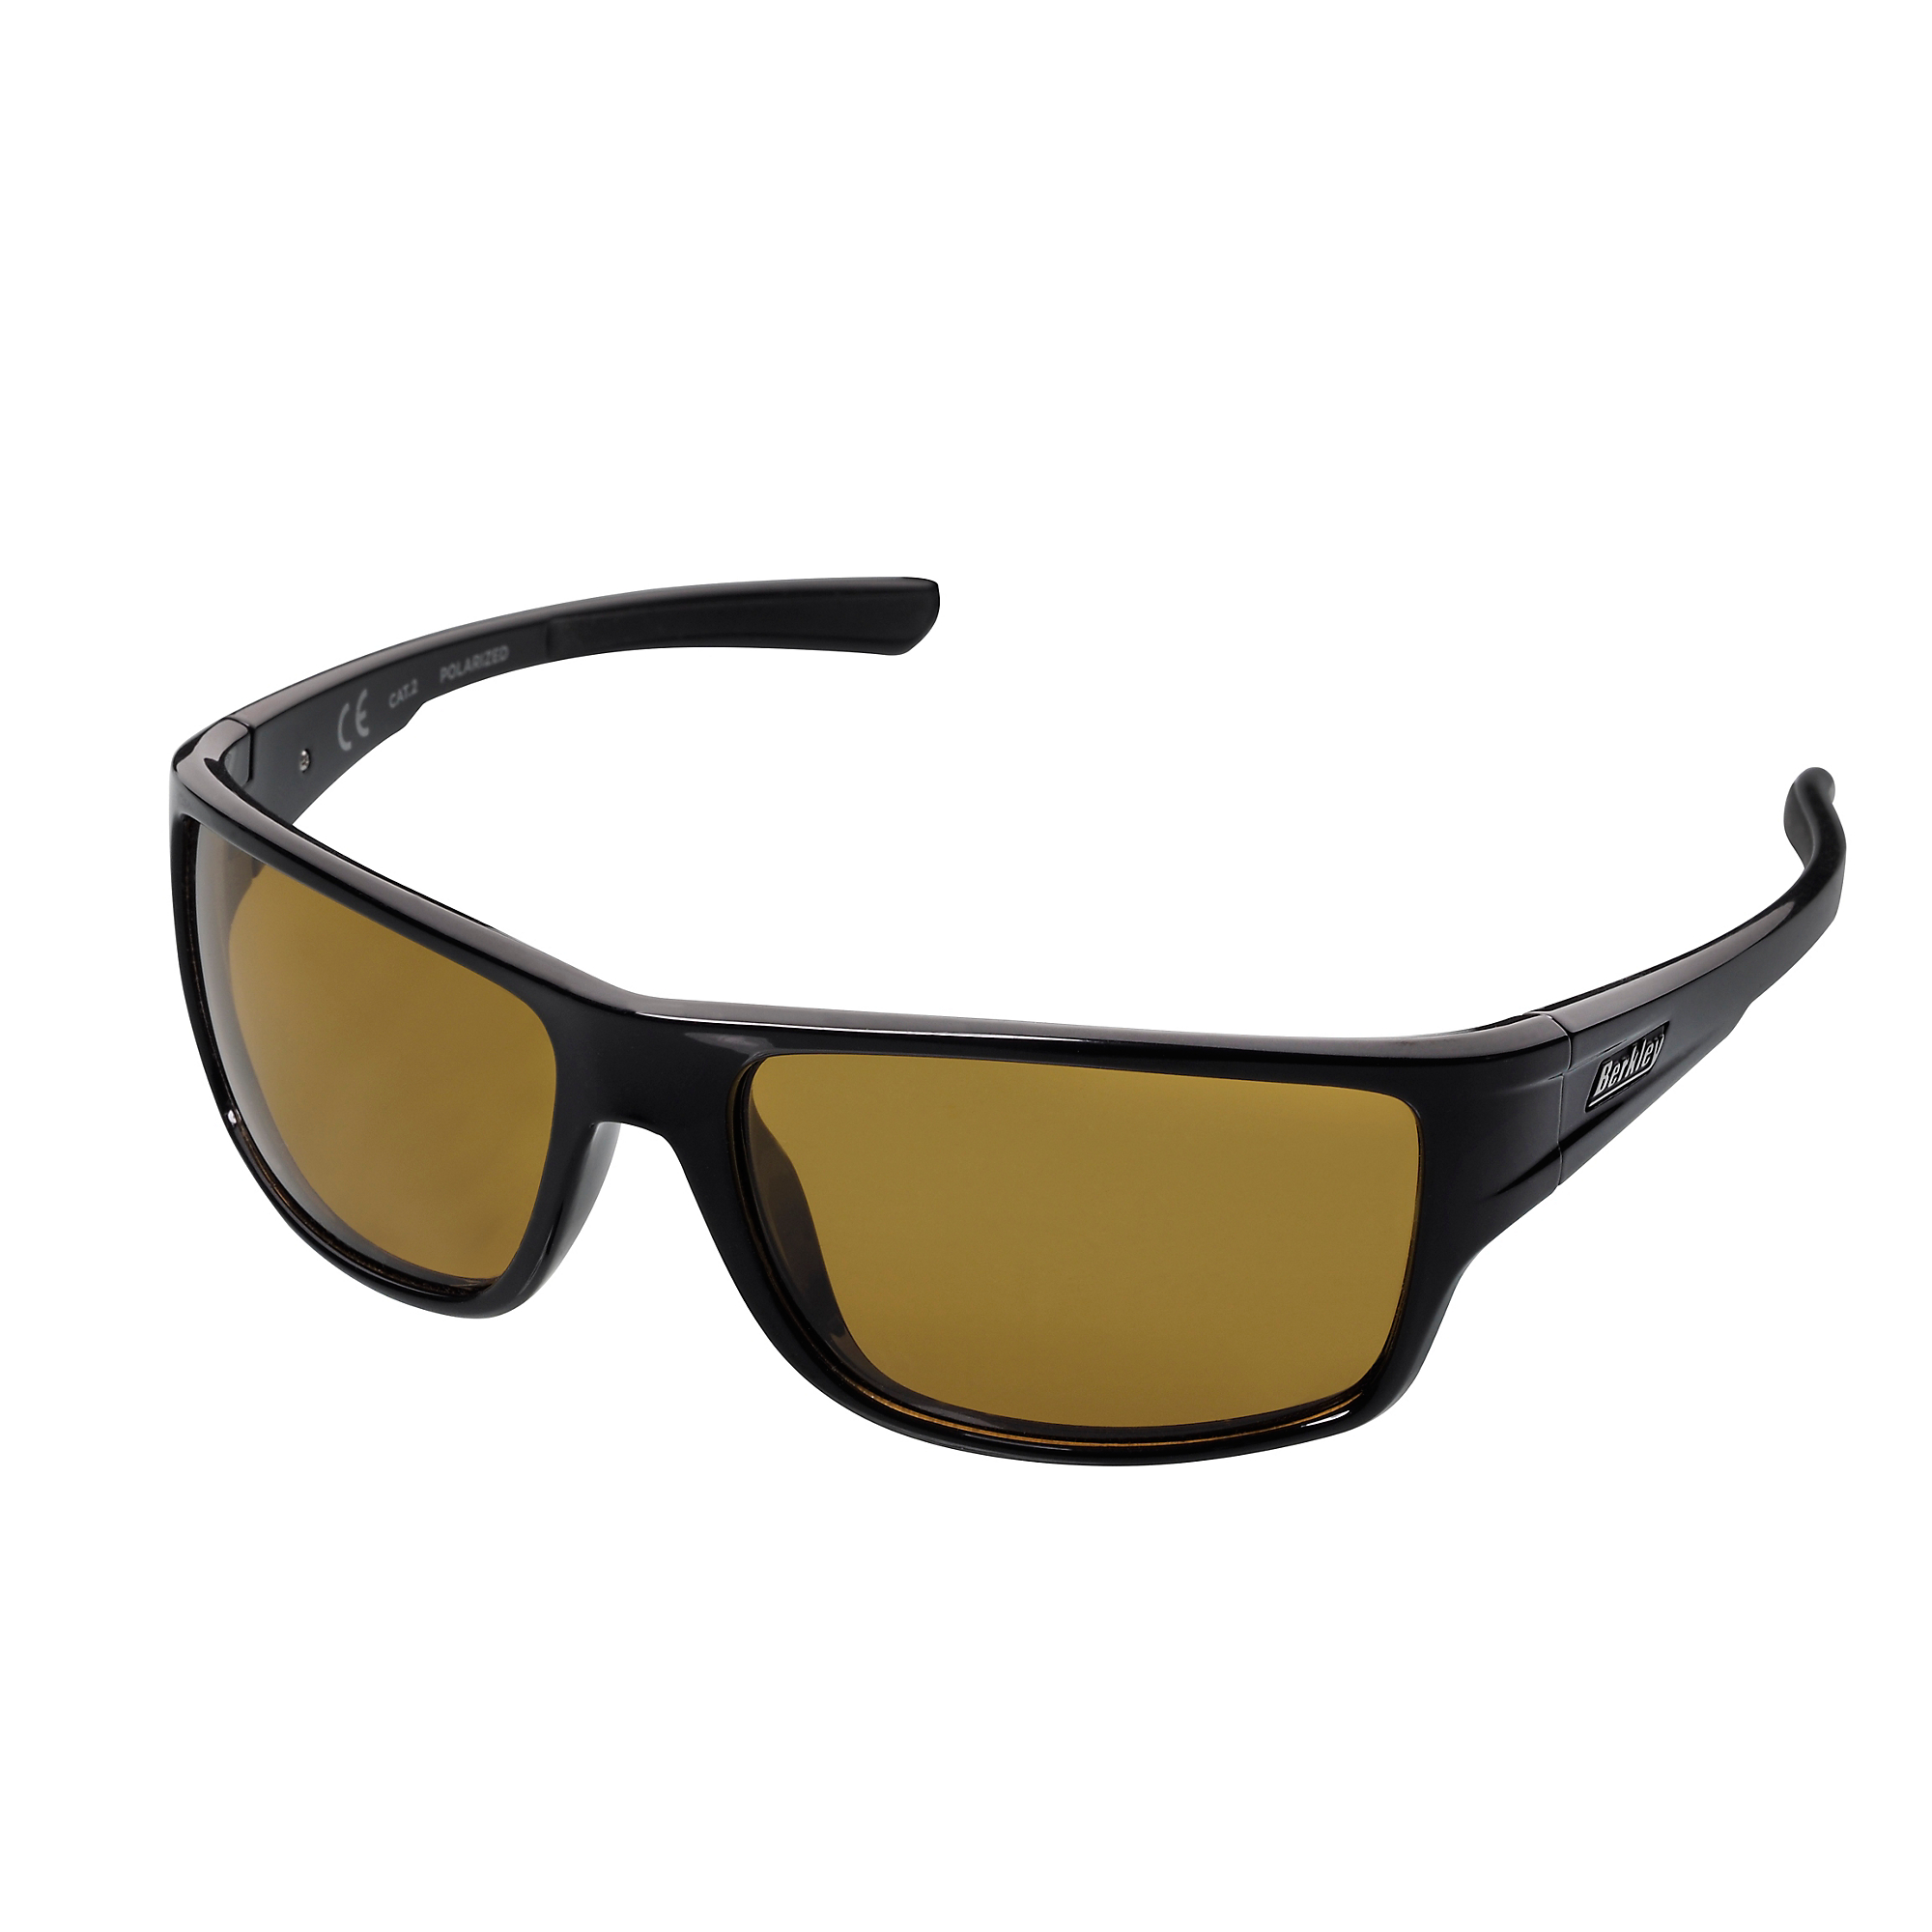 Berkley B11 Sunglasses - Noir / Jaune